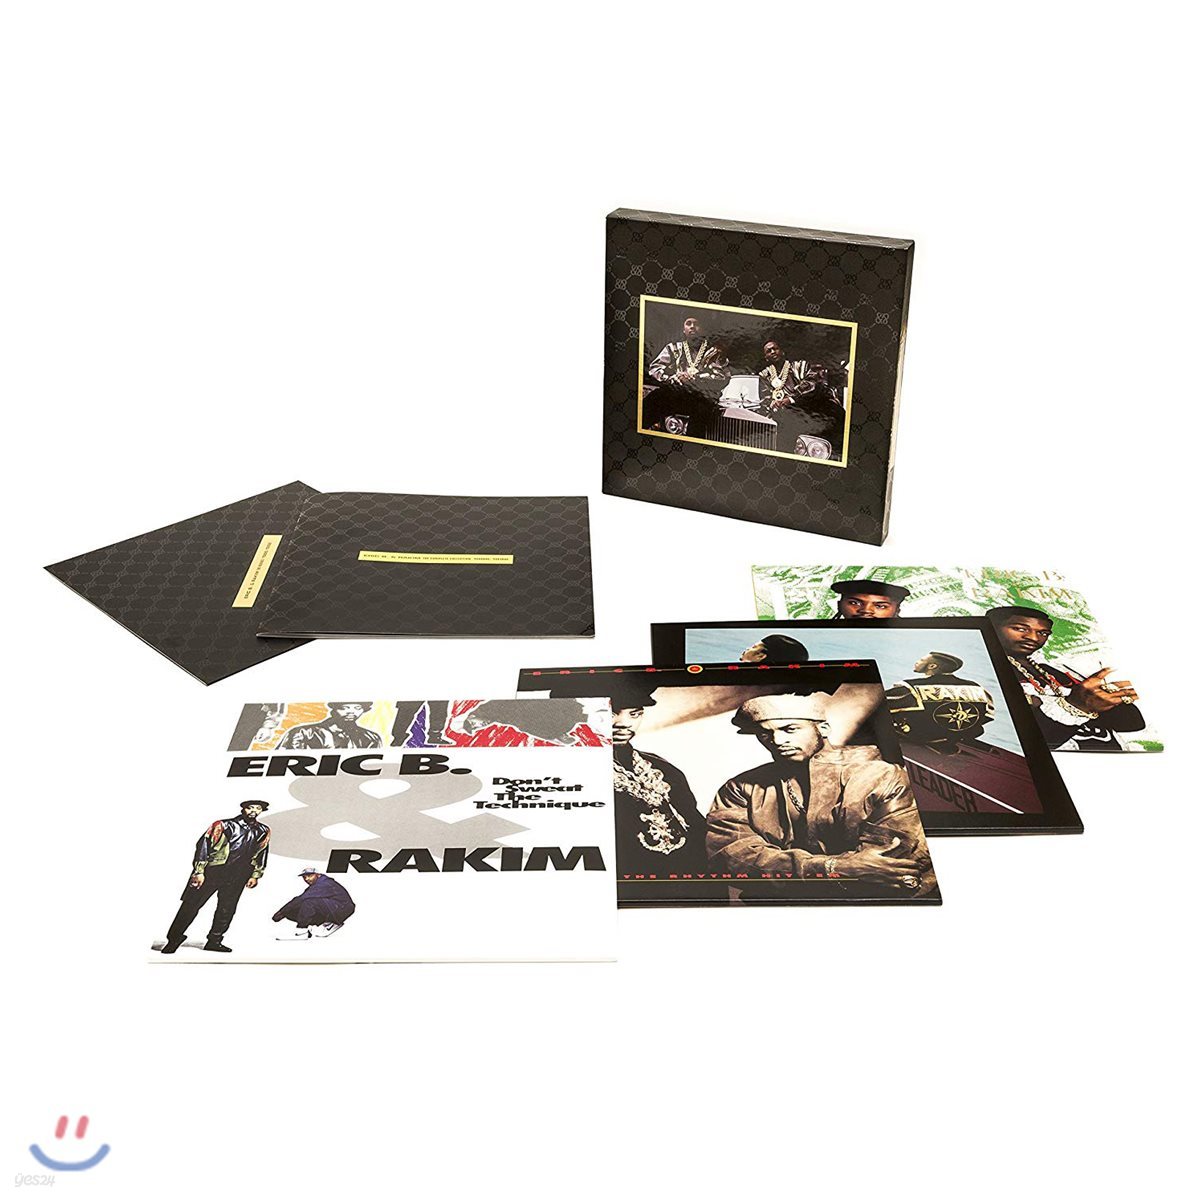 Eric B. &amp; Rakim (에릭 비 &amp; 라킴) - The Complete Collection 1987-1992 [8 LP+2 CD Box Set]